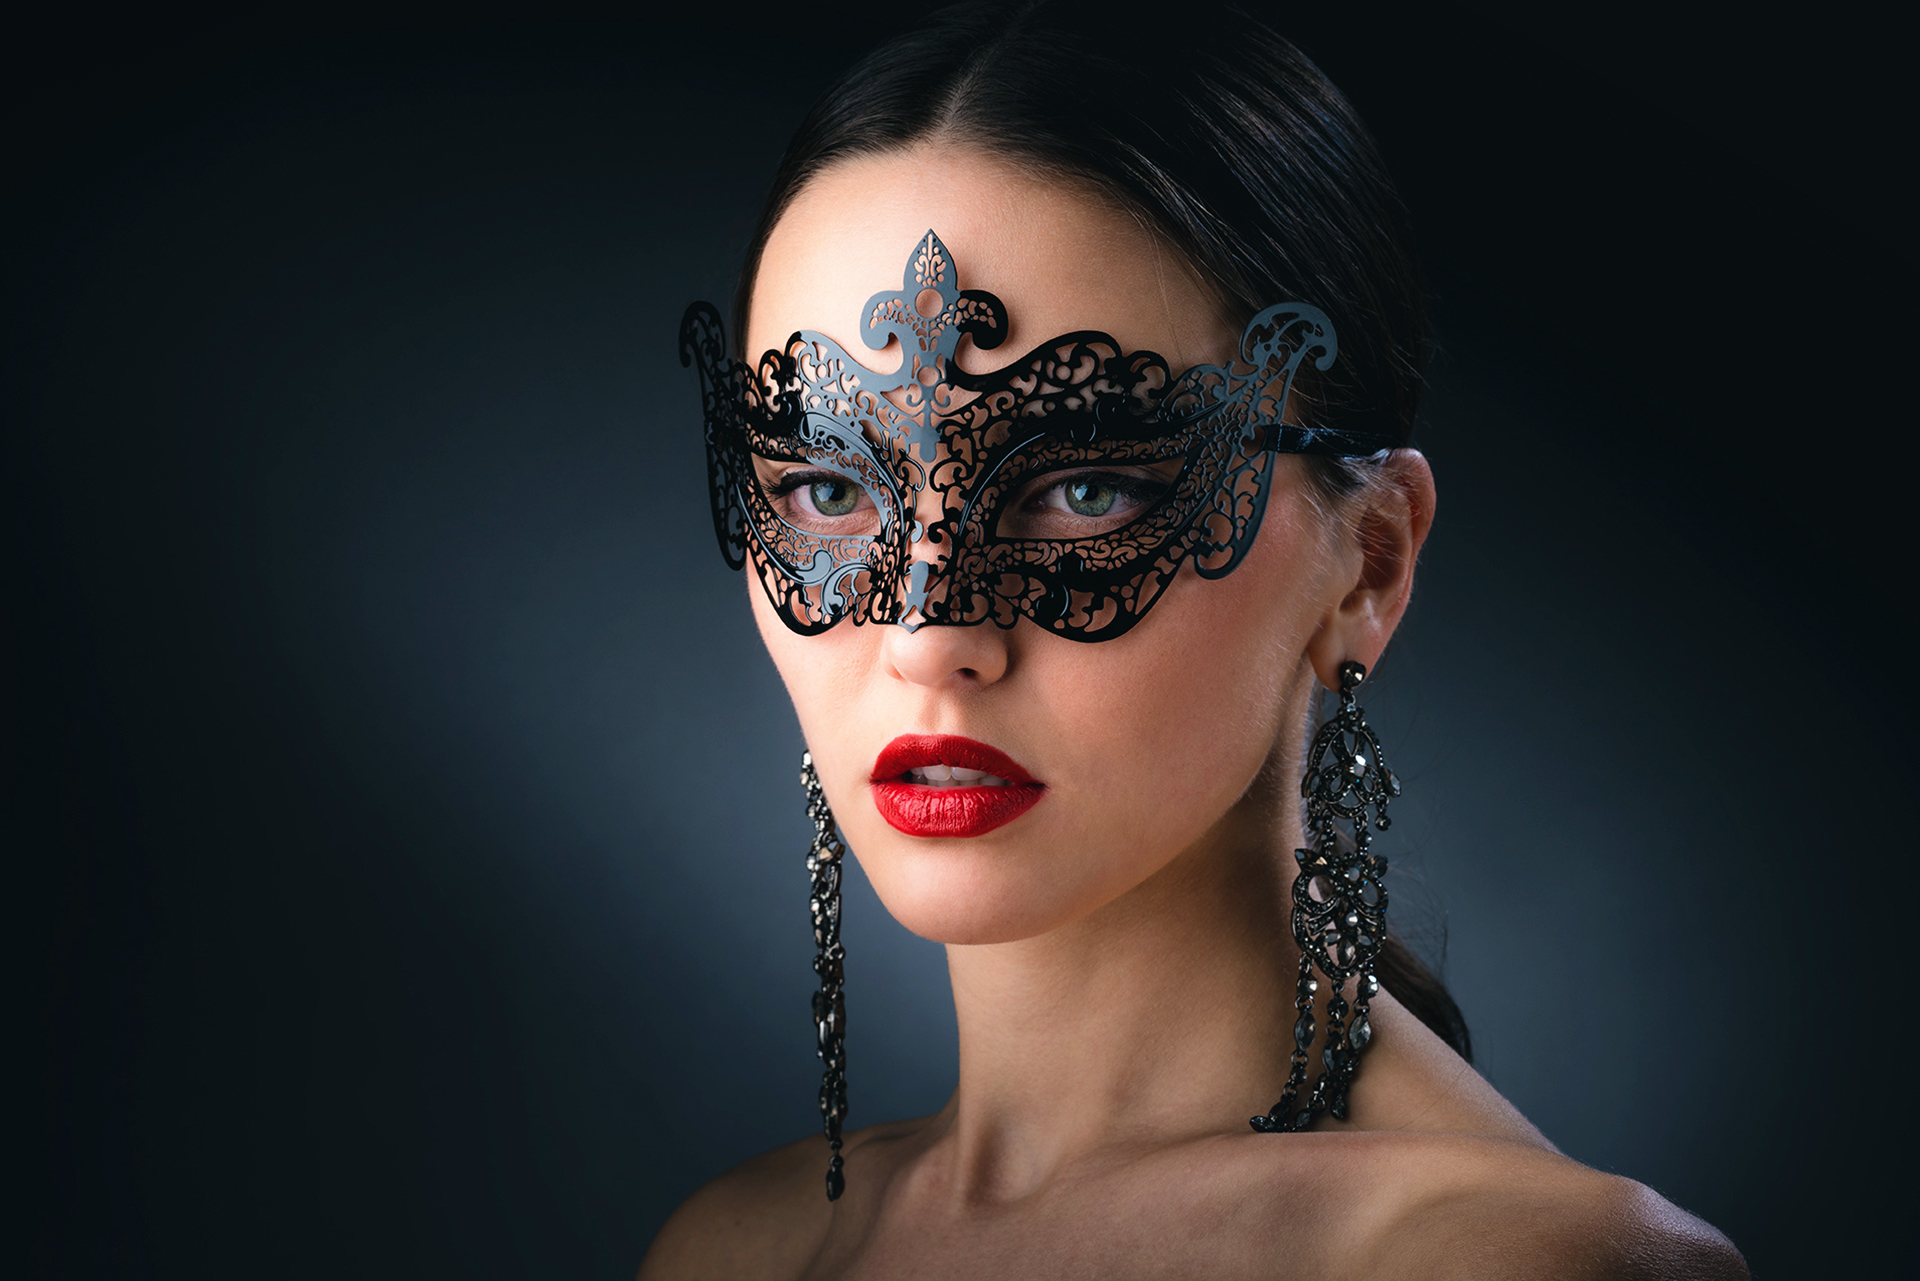 Masked Woman by Yuri Afanasiev